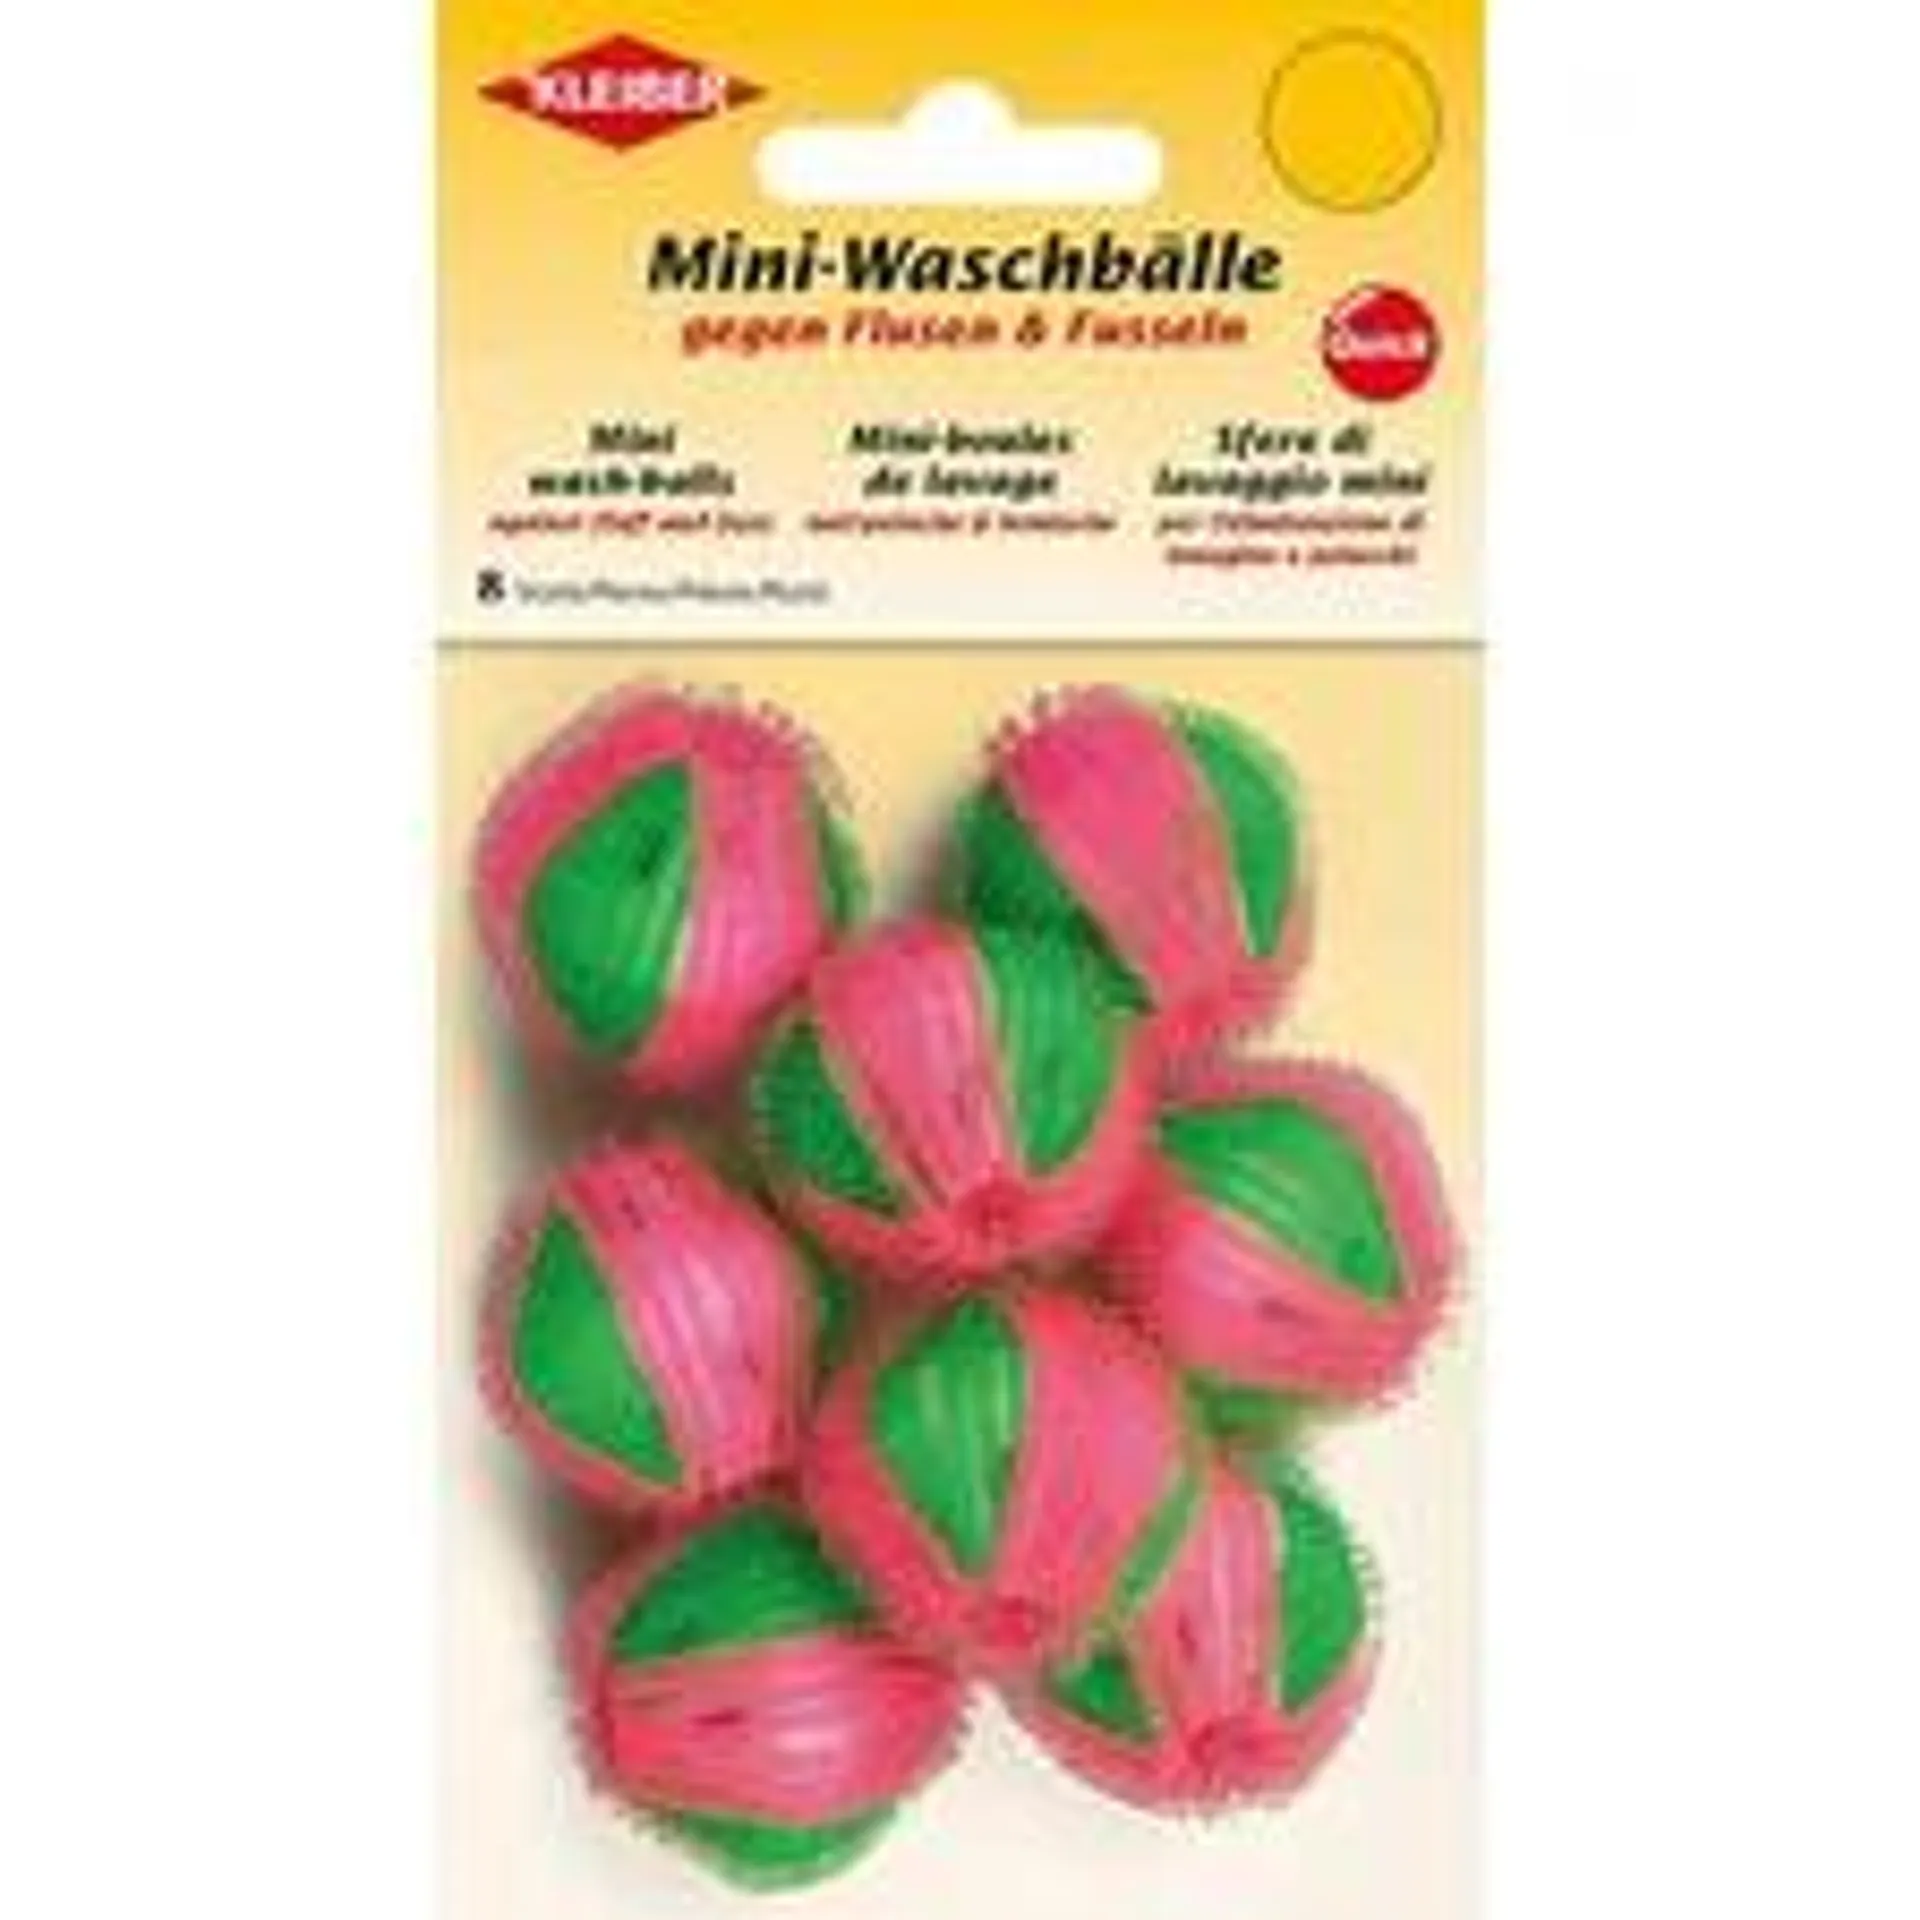 Mini boules de lavage, rose/vert